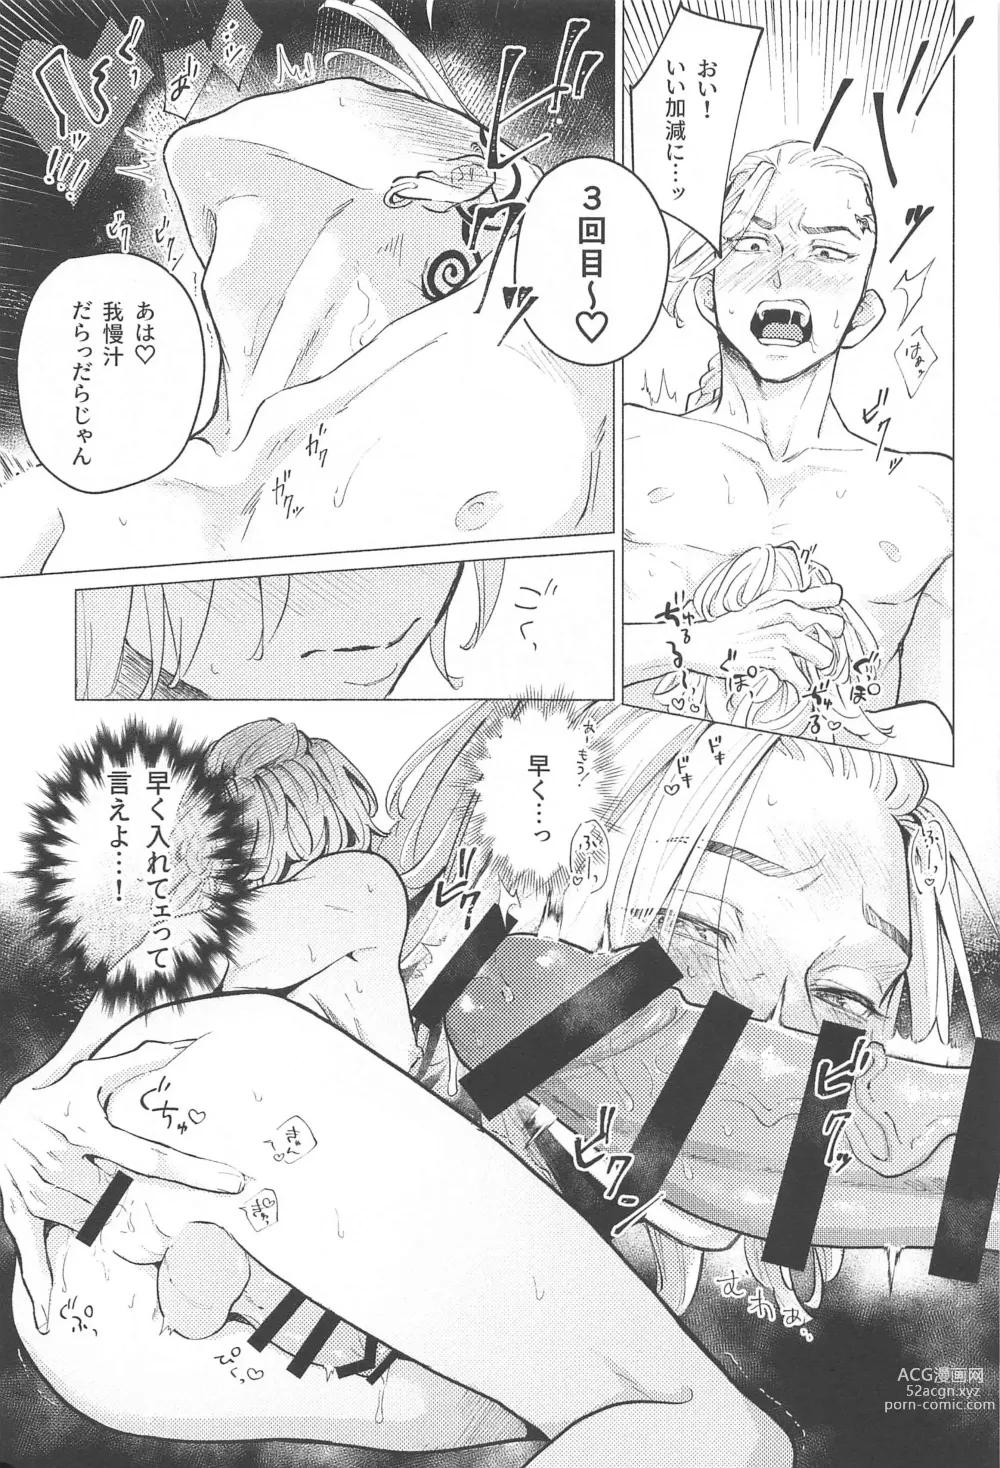 Page 10 of doujinshi Endure.